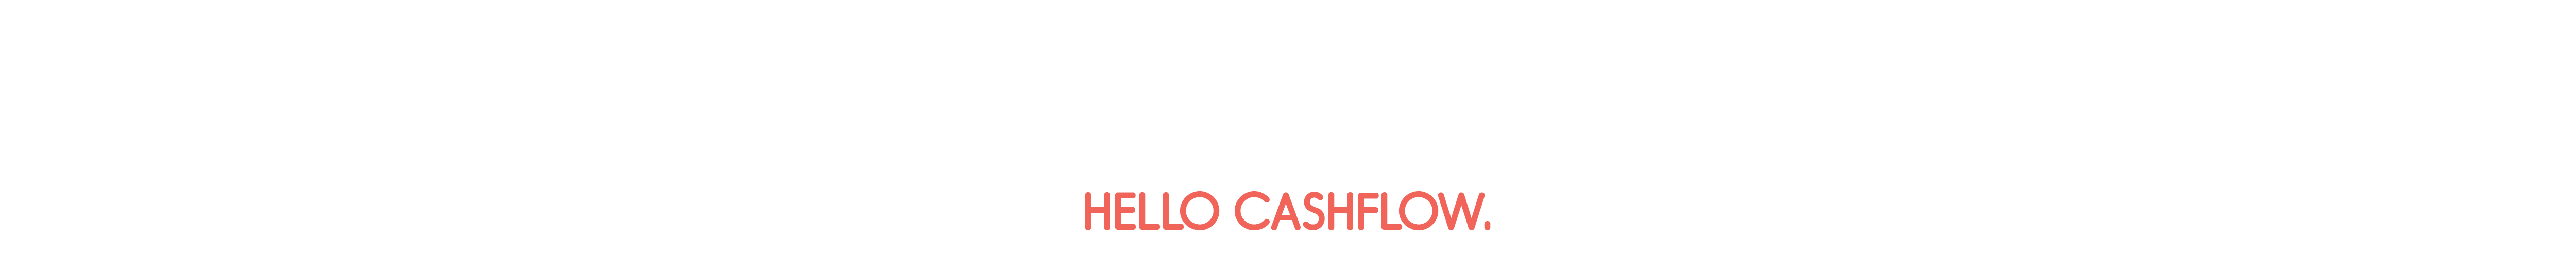 goodbye denied claims hello cashflow